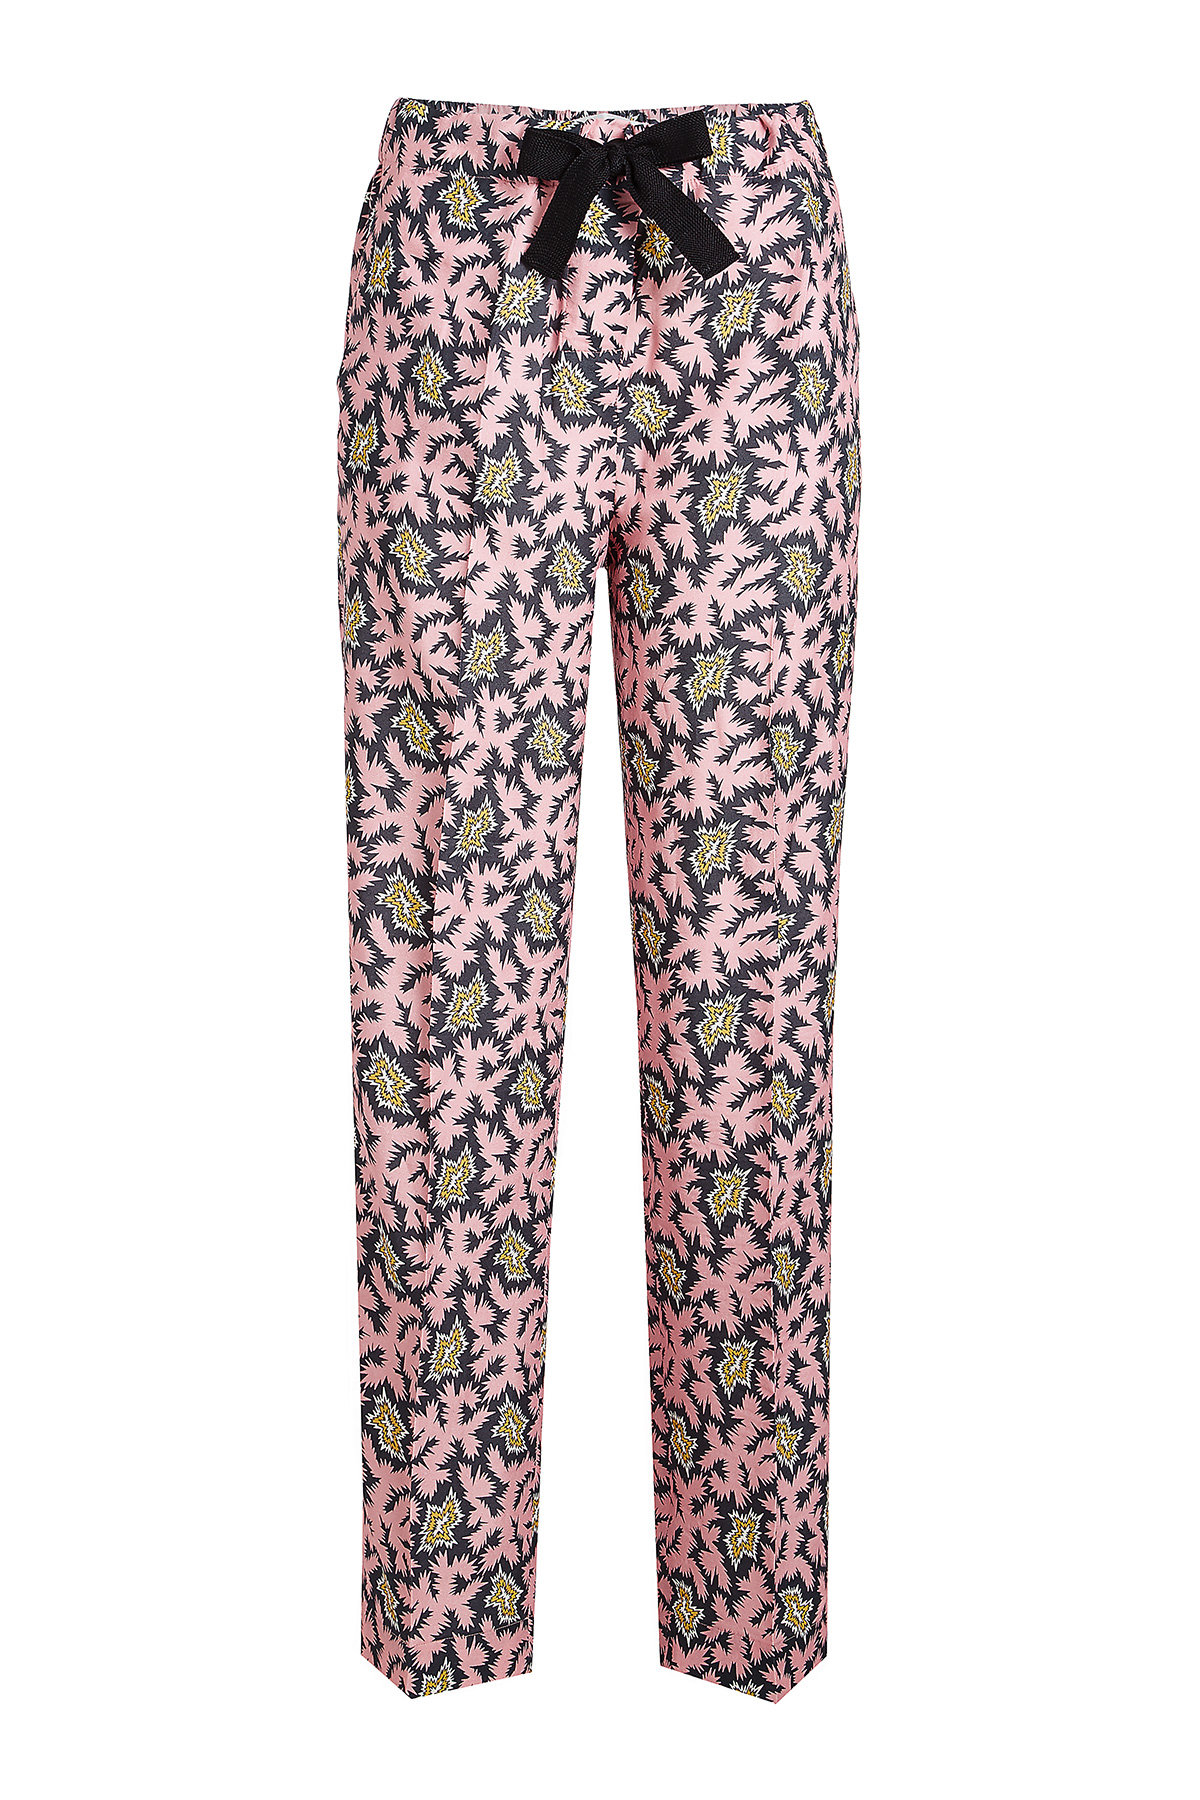 Victoria Victoria Beckham - Printed Pyjama Pant Trousers